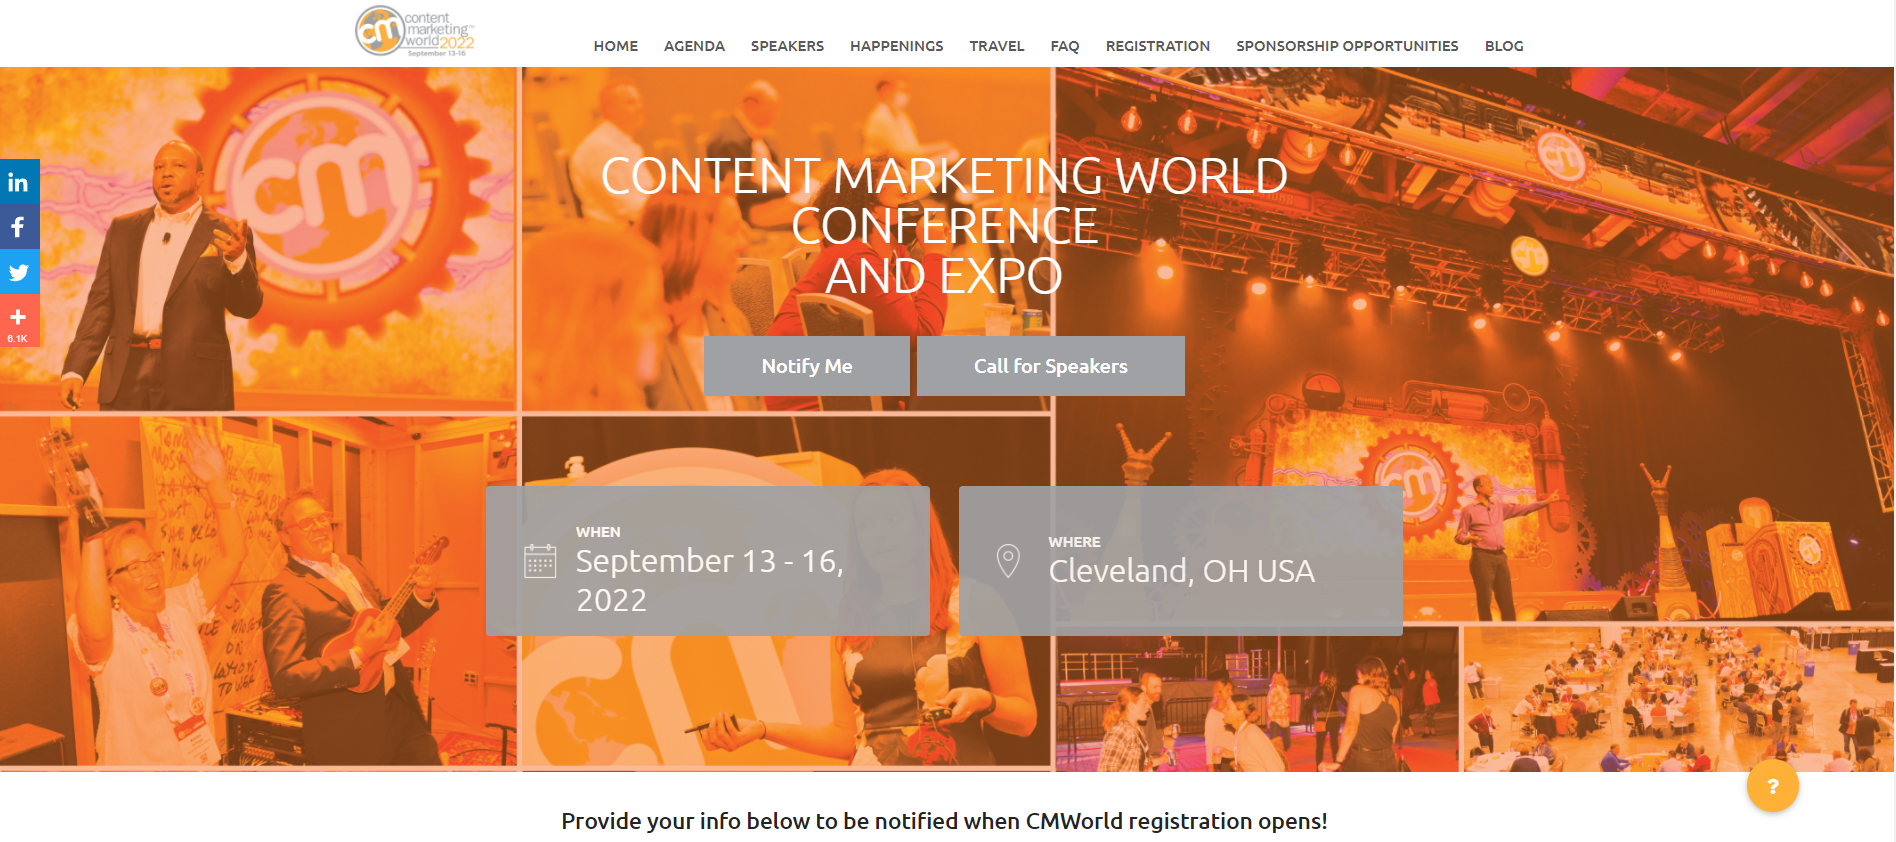 CMWorld Content Marketing Conference 2022